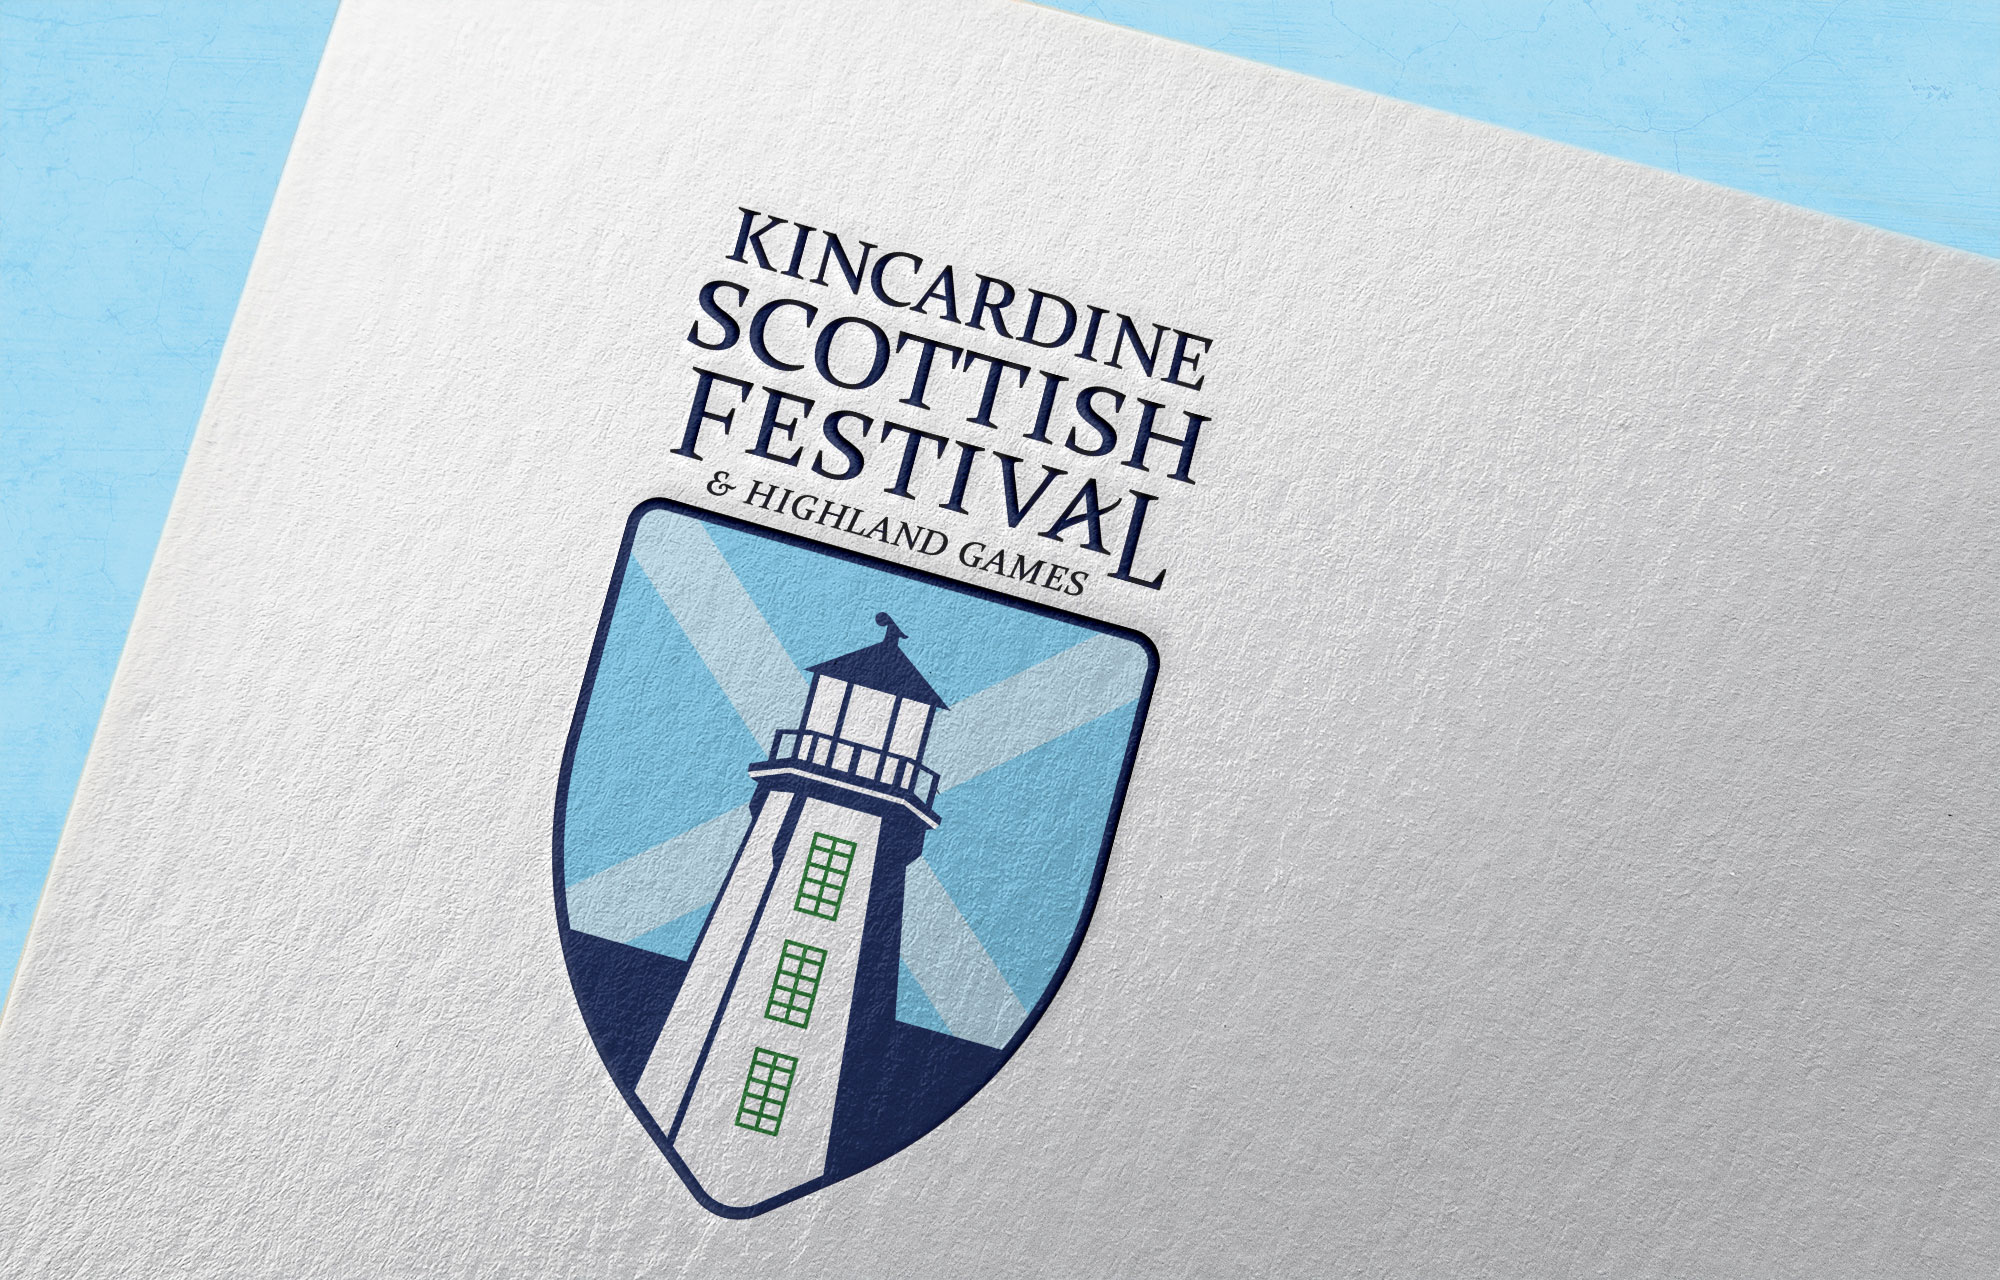 Logo for the Kincardine Scottish Festival and Highland Games